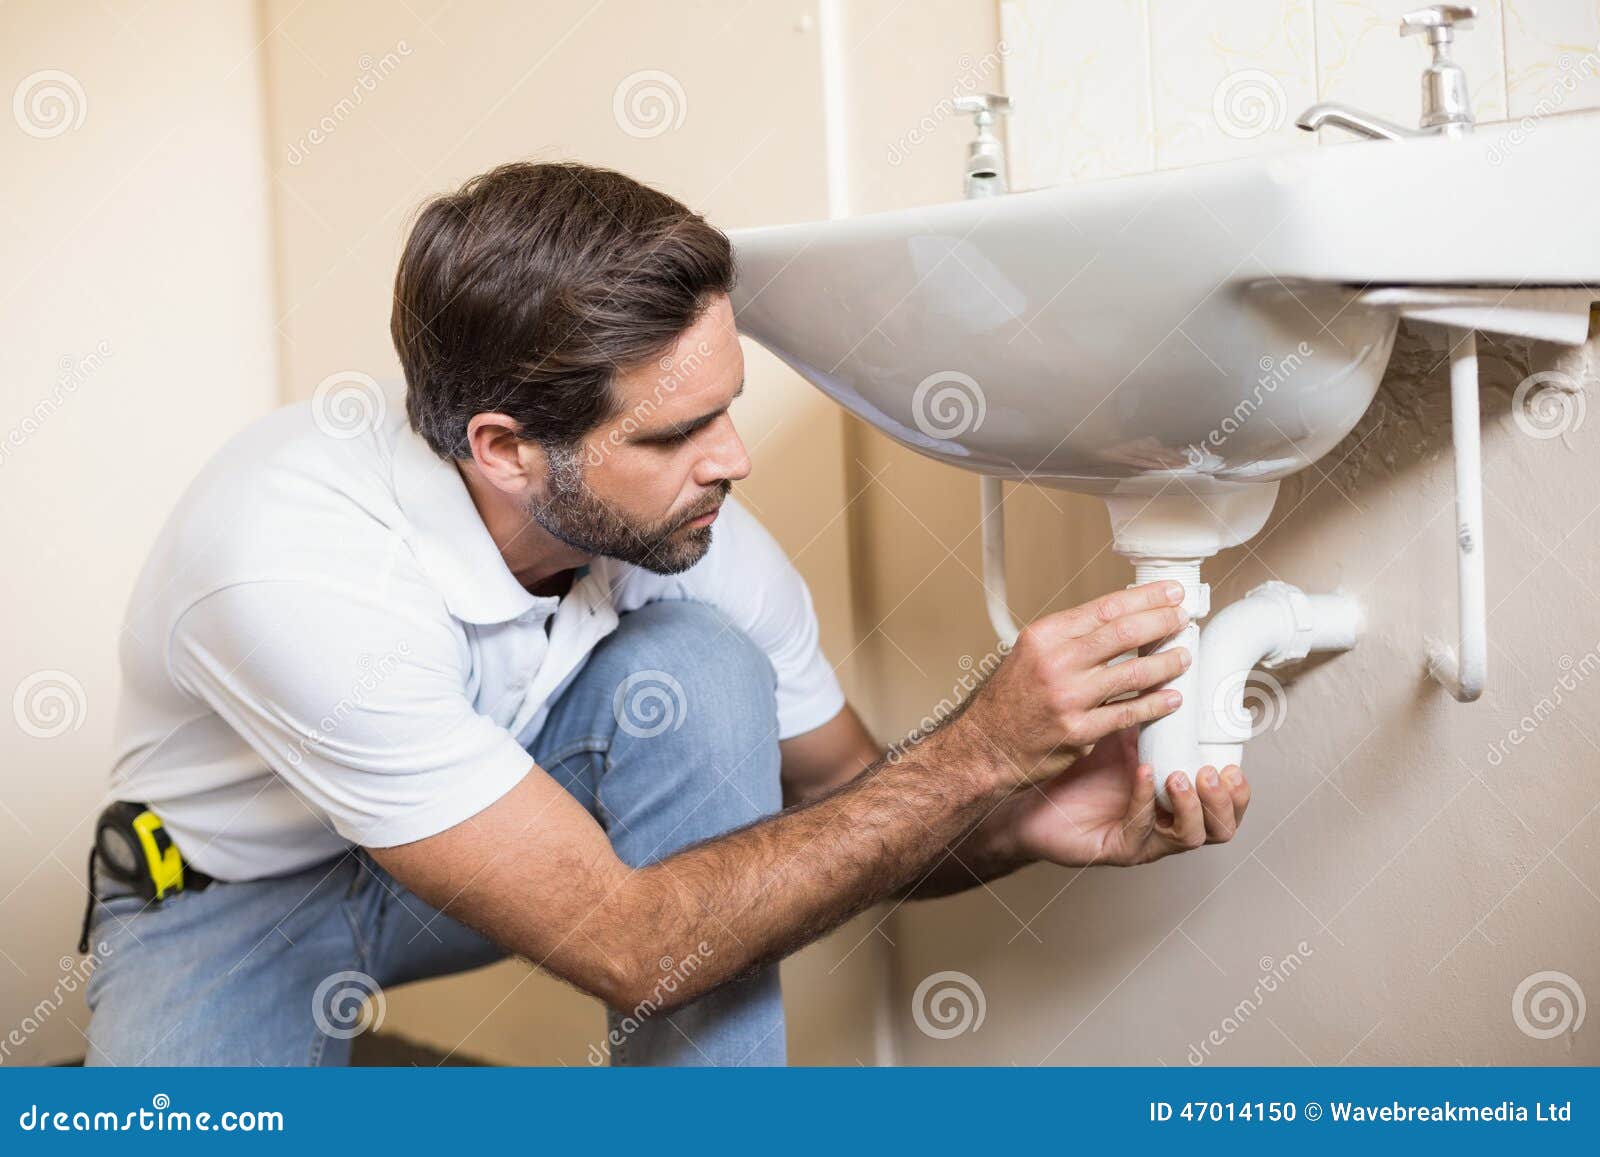 liquid plumber bathroom sink